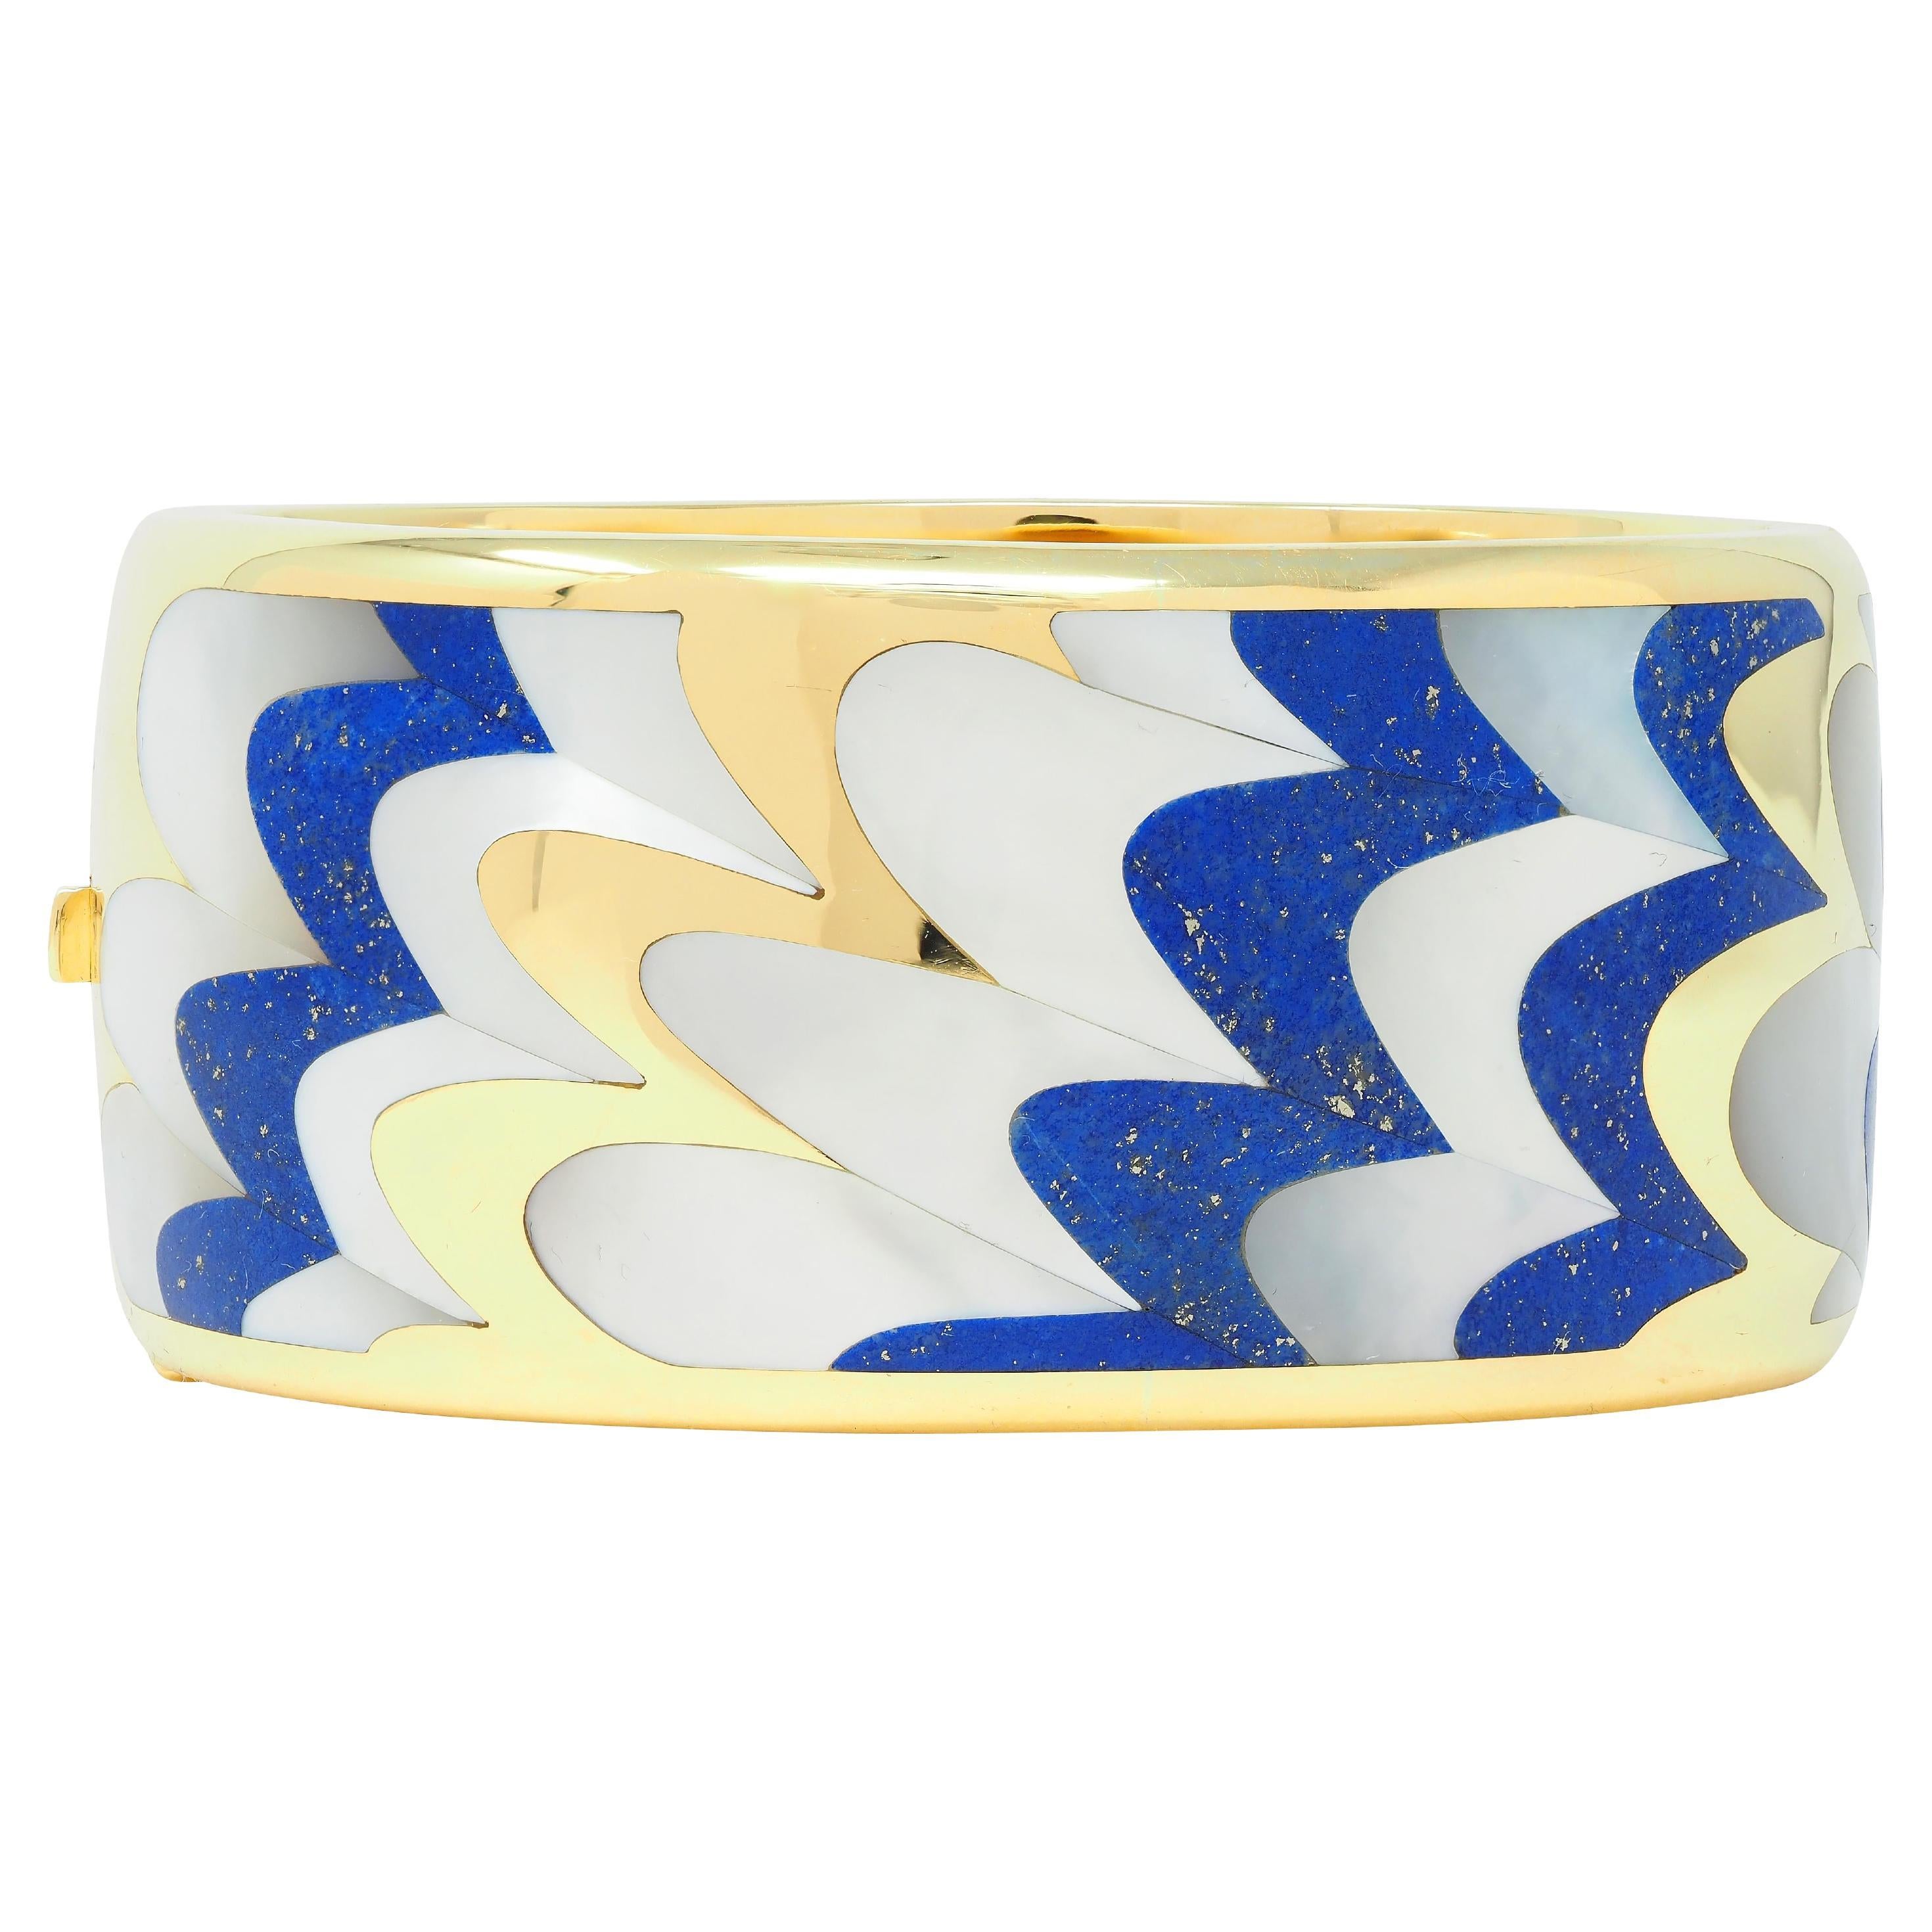 Tiffany & Co. Lapislazuli-Perlmutt-Armband aus 18 Karat Gelbgold